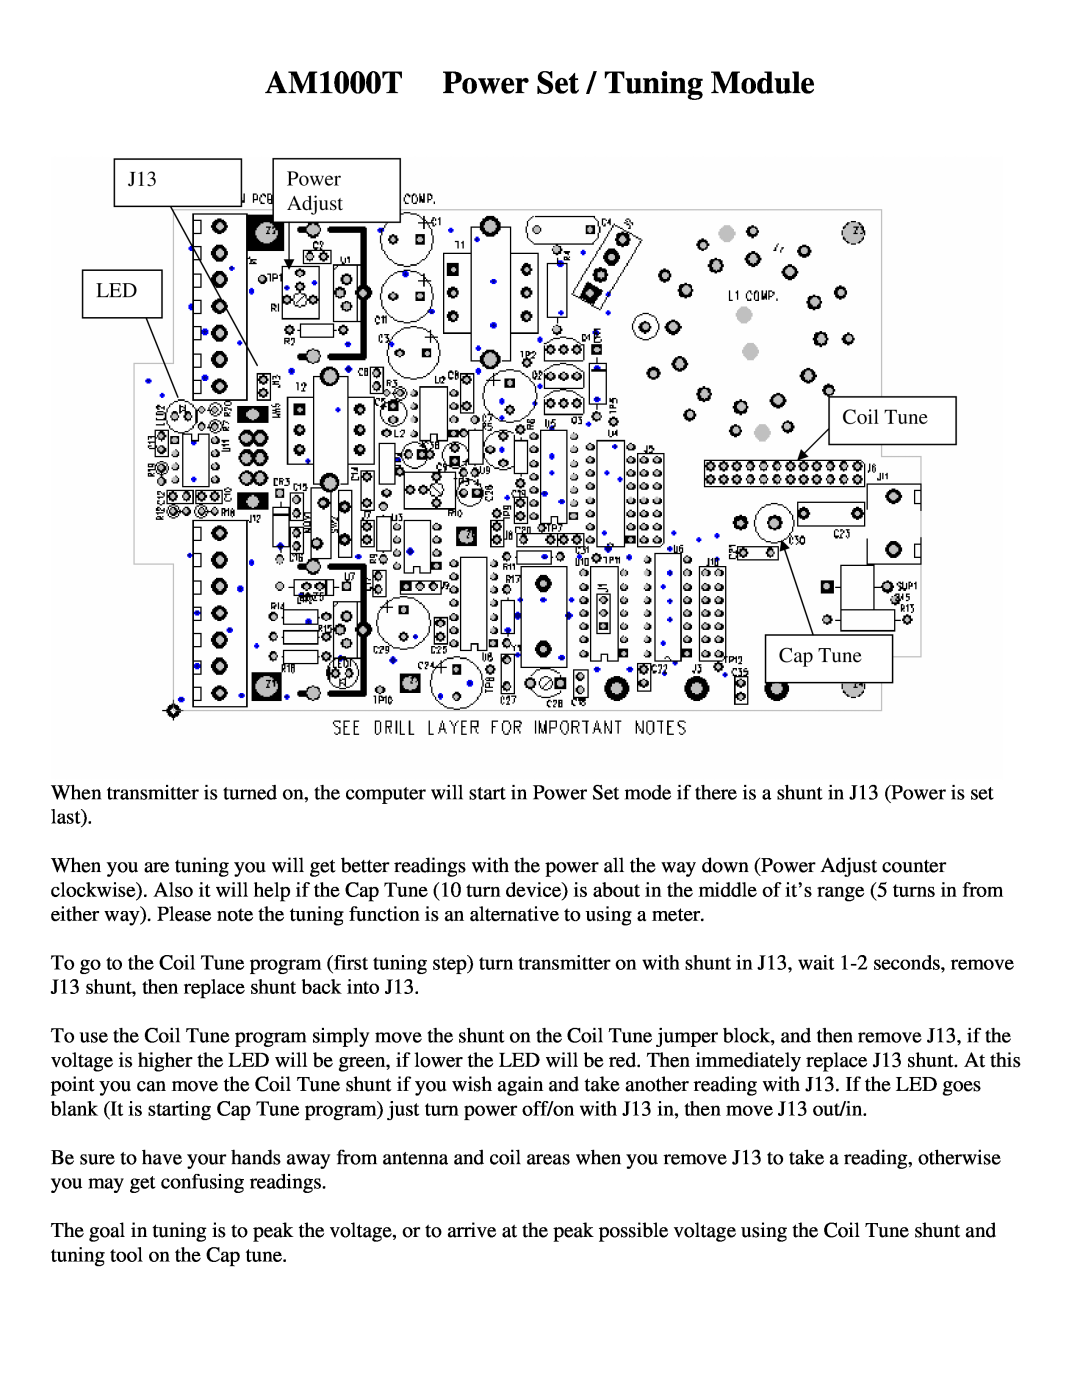 Hamilton Electronics installation instructions AM1000T Power Set / Tuning Module 